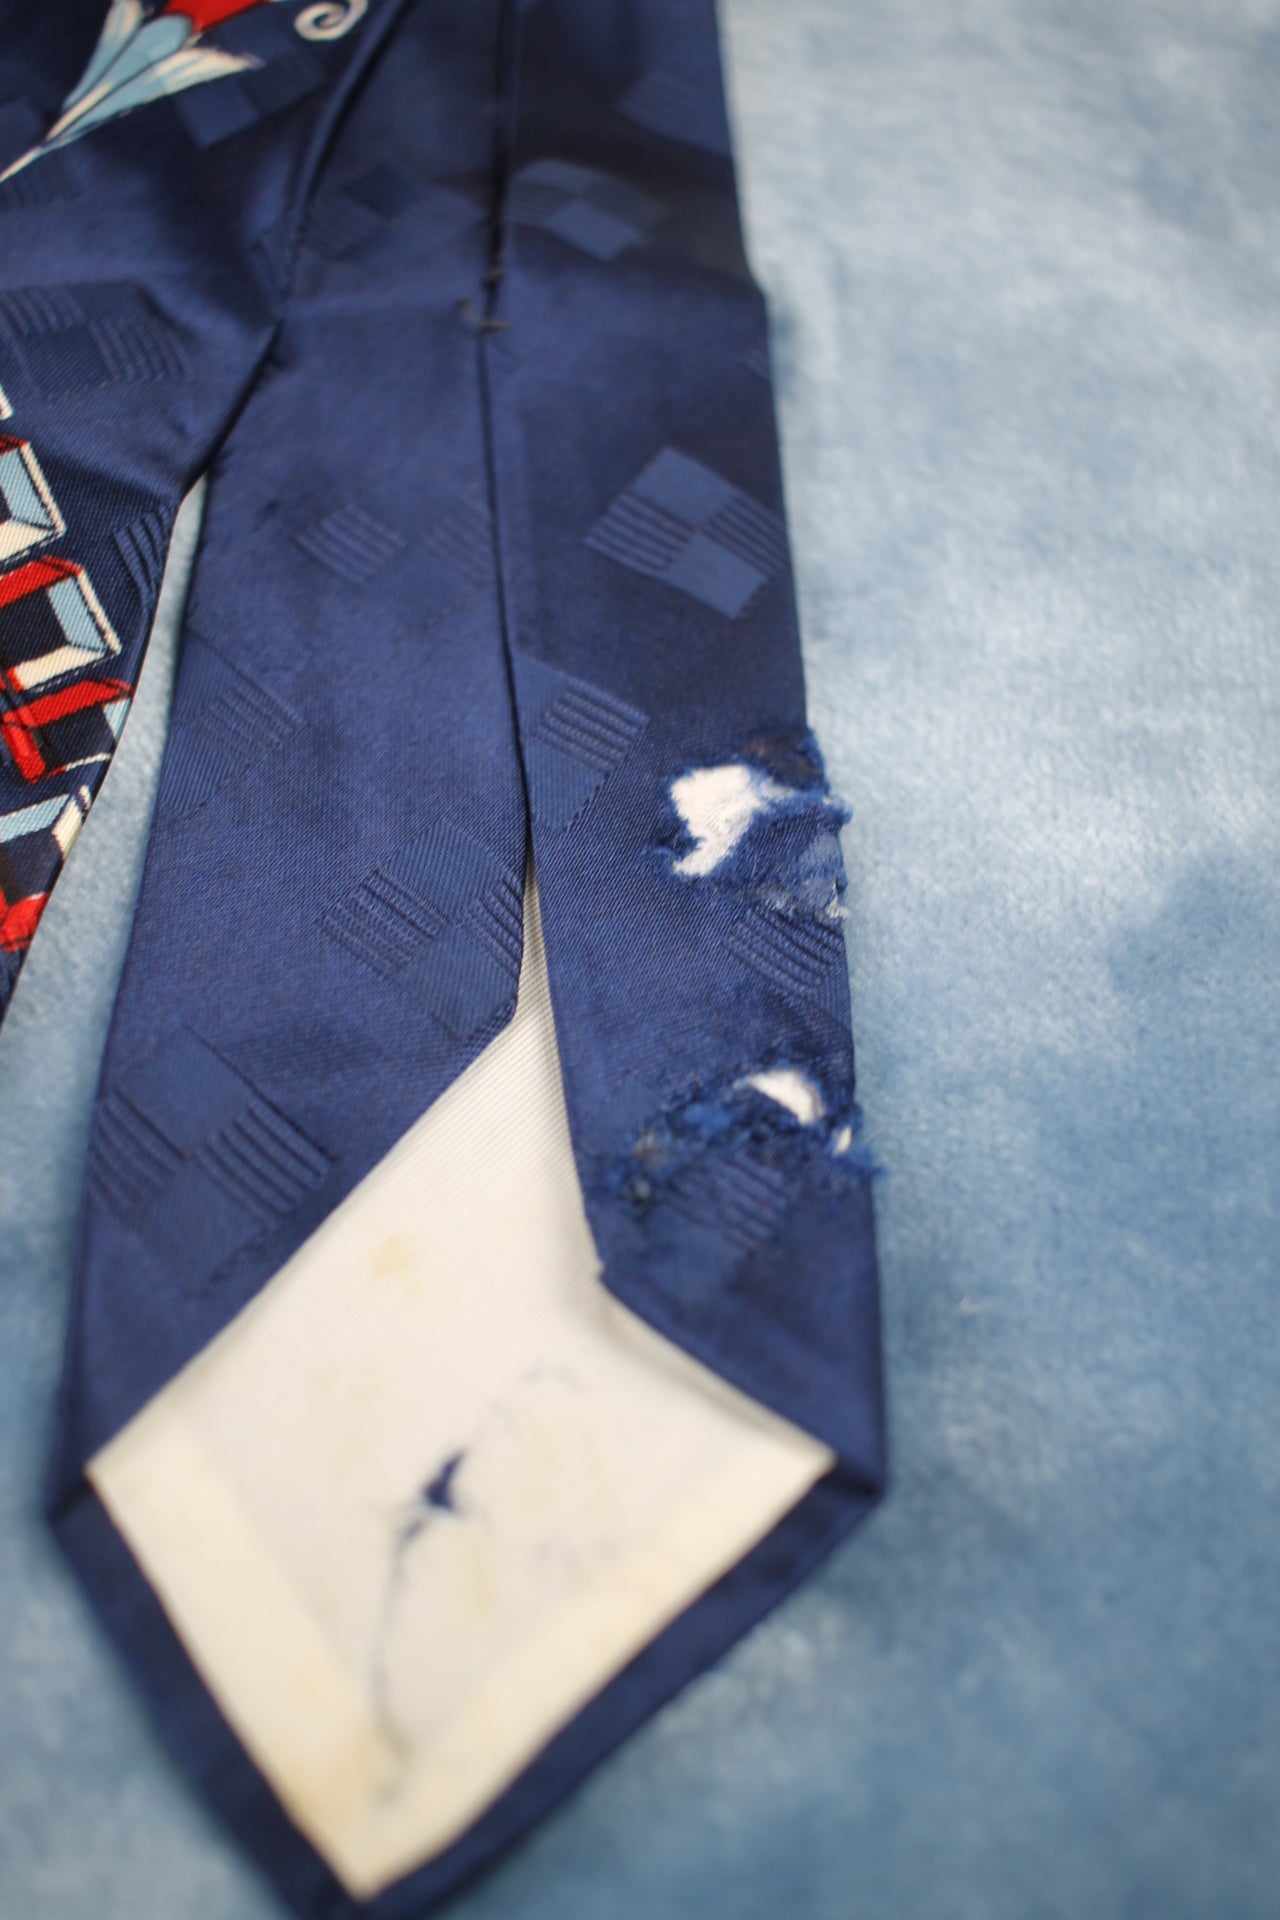 Vintage 1940s/50s dark blue red chain floral swing tie